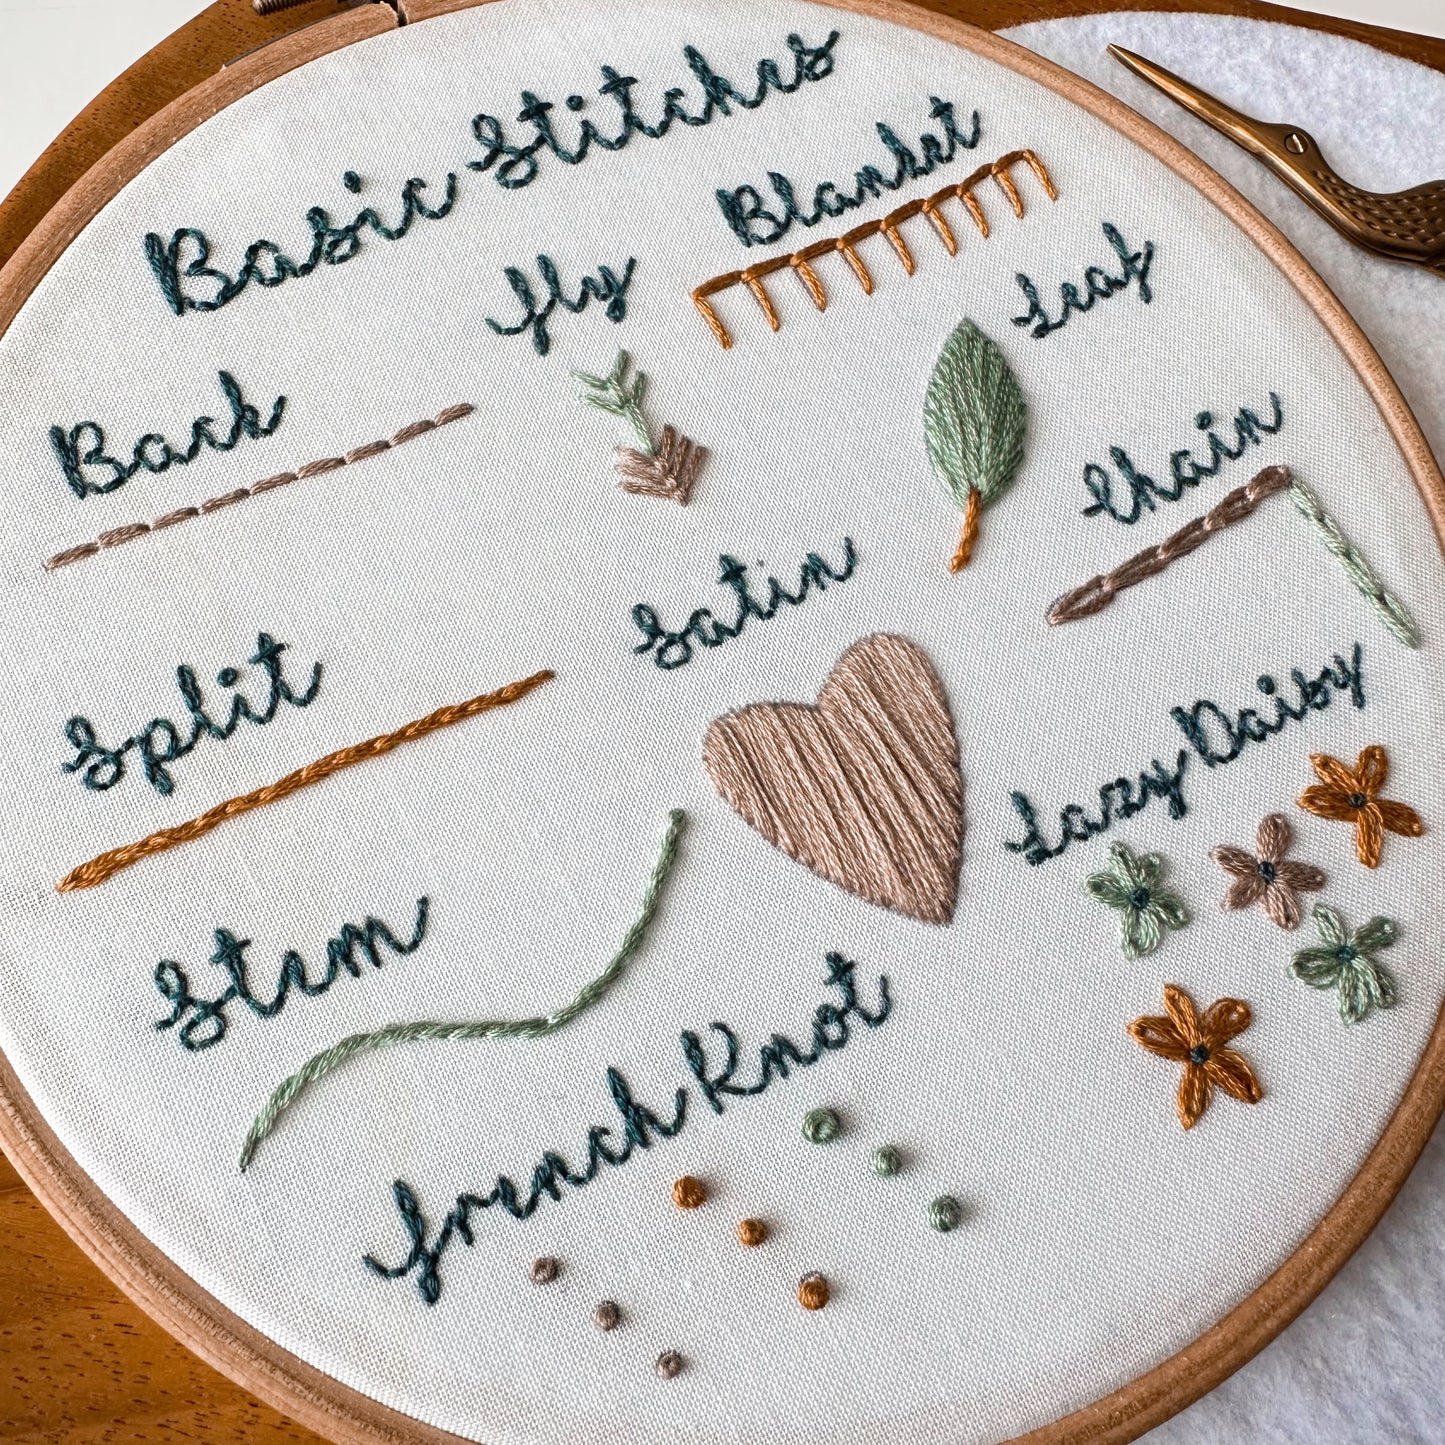 Basic Stitch Sampler DIY Embroidery Kit for Beginners